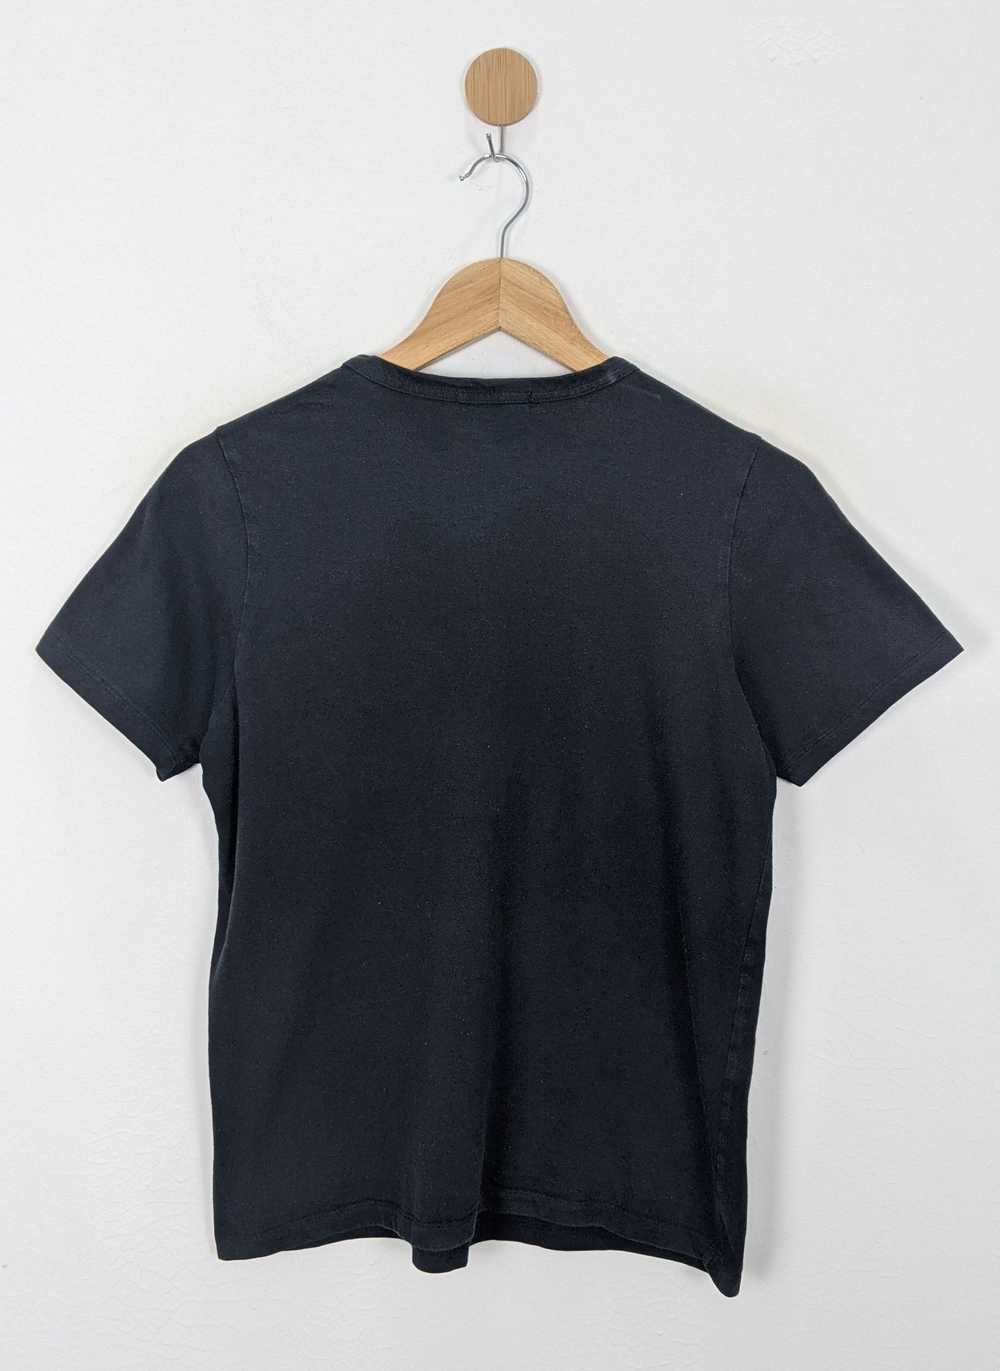 Y's for living Yohji Yamamoto shirt - image 3